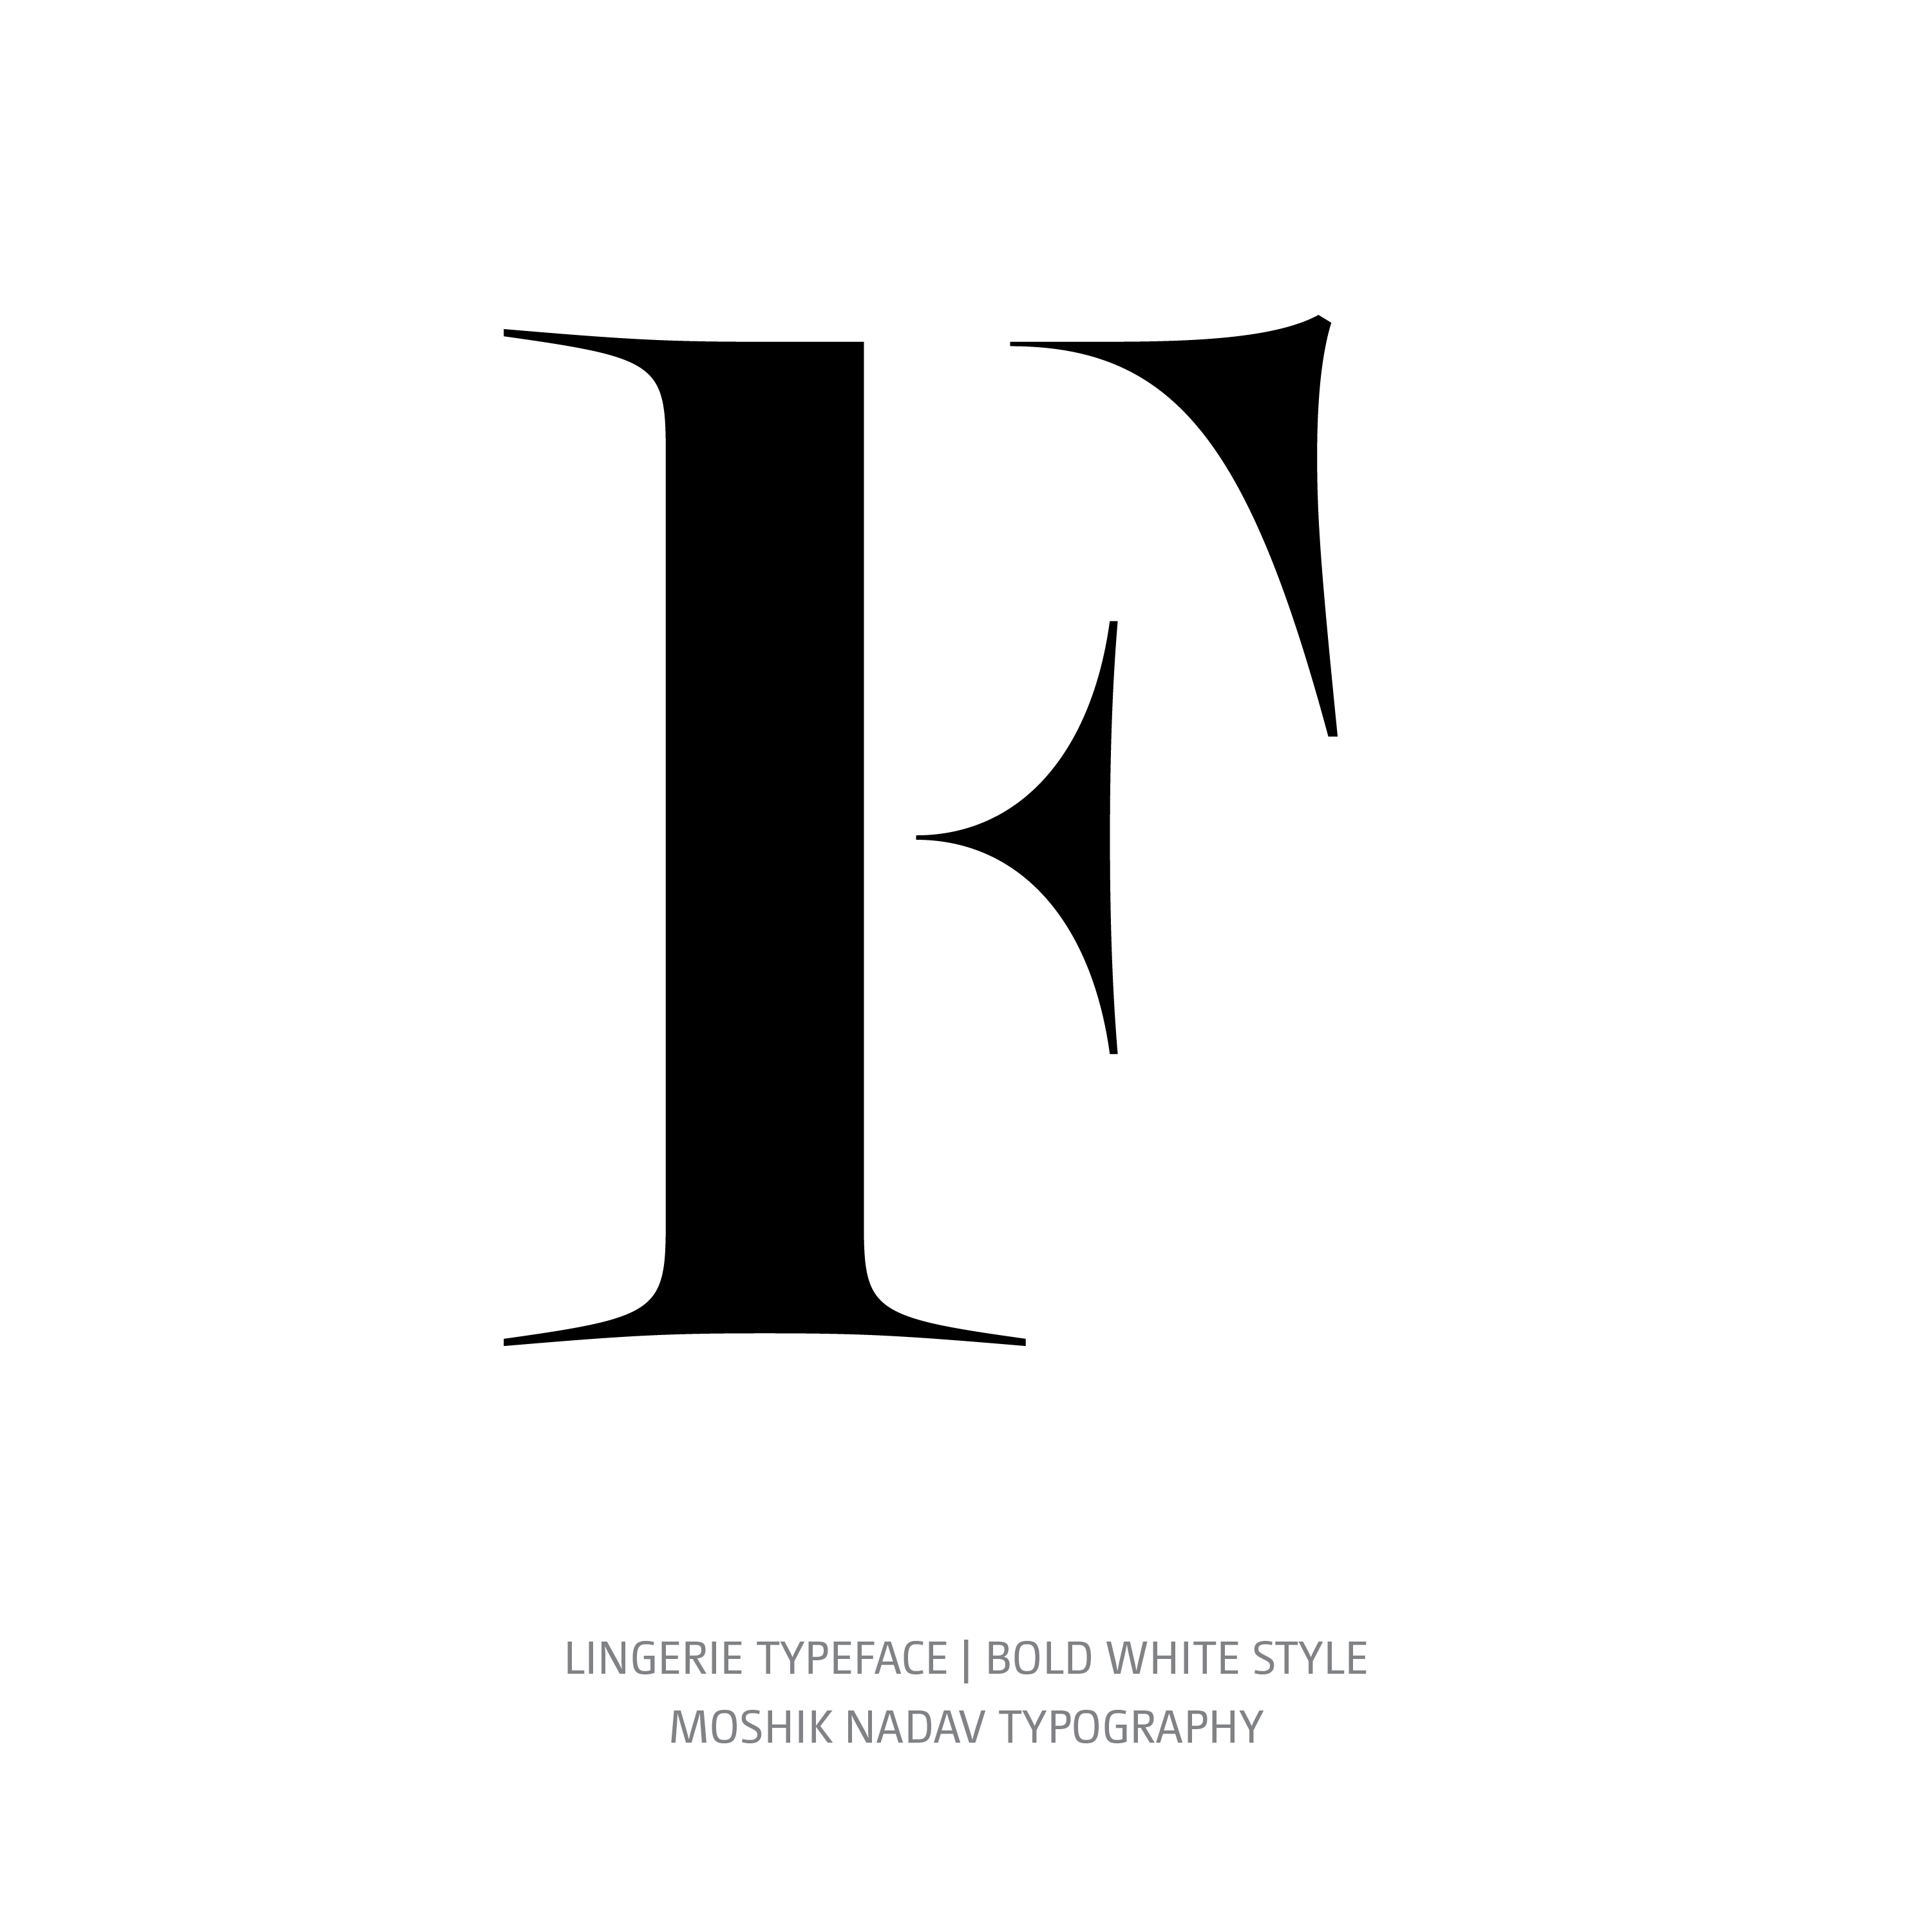 Lingerie Typeface Bold White F